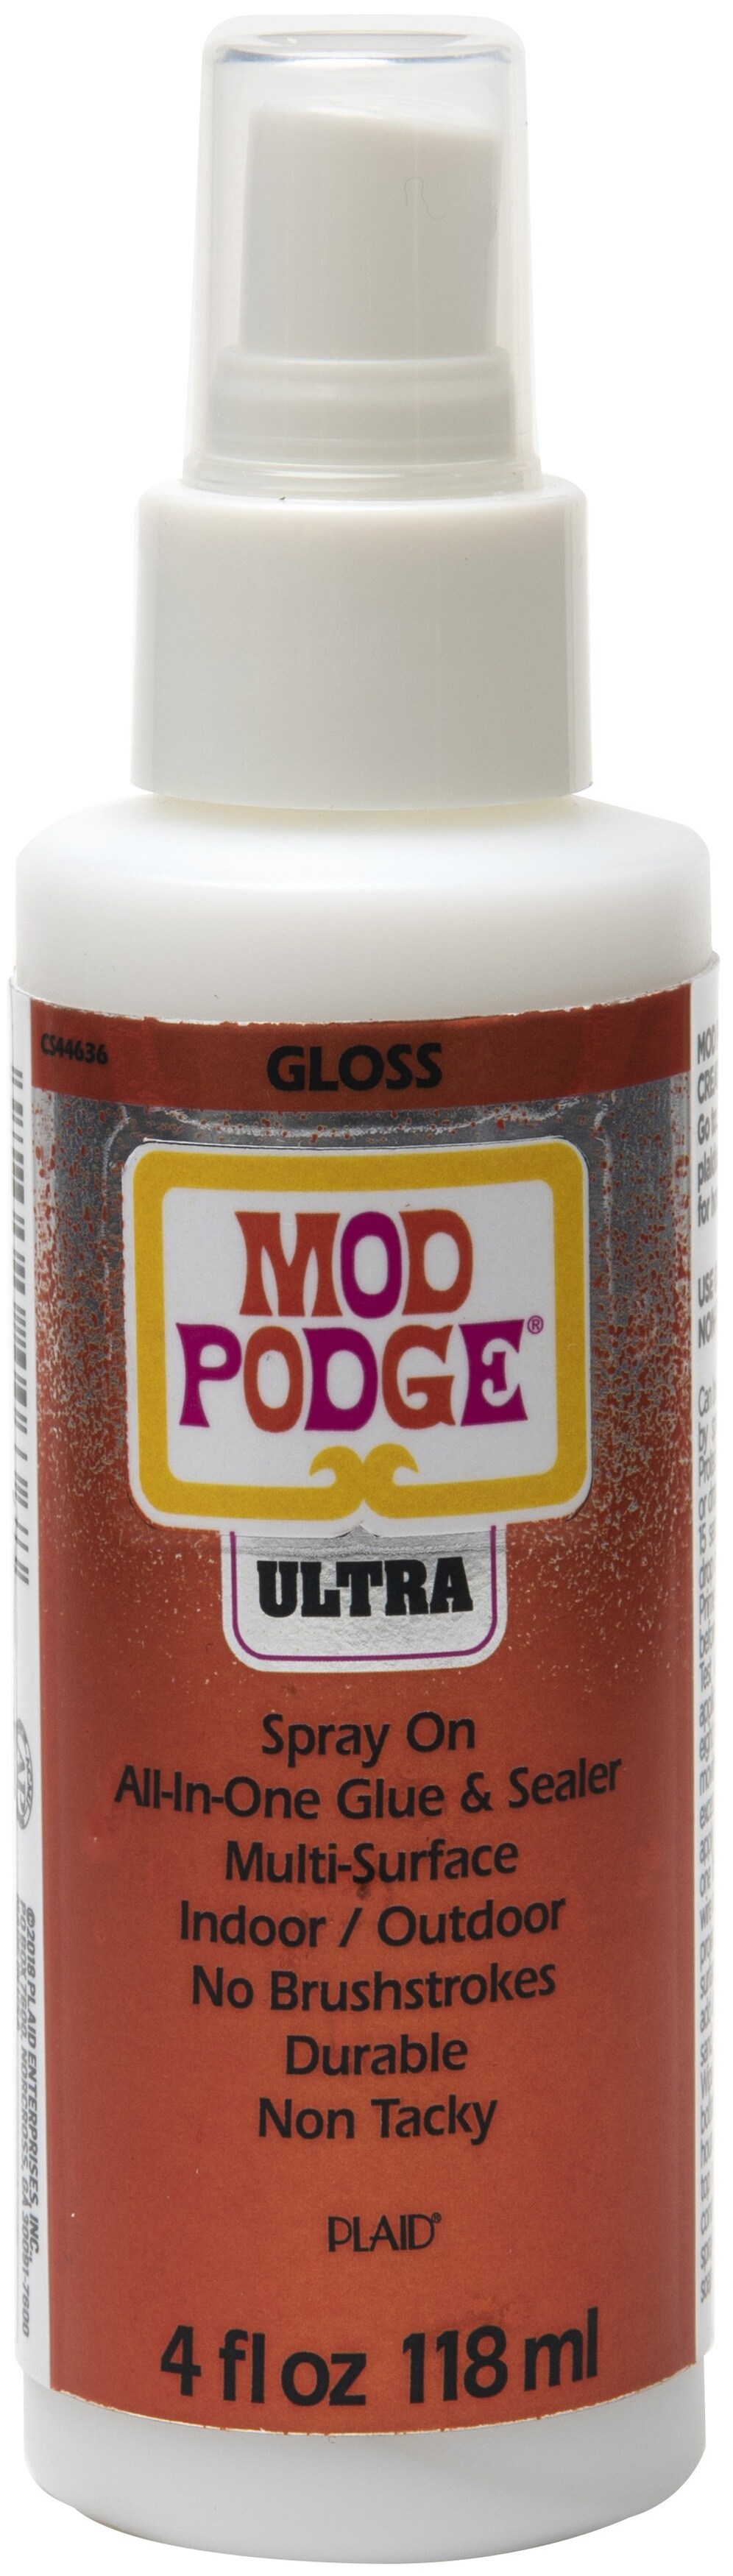 Mod Podge Ultra Gloss Spray On Sealer-4oz